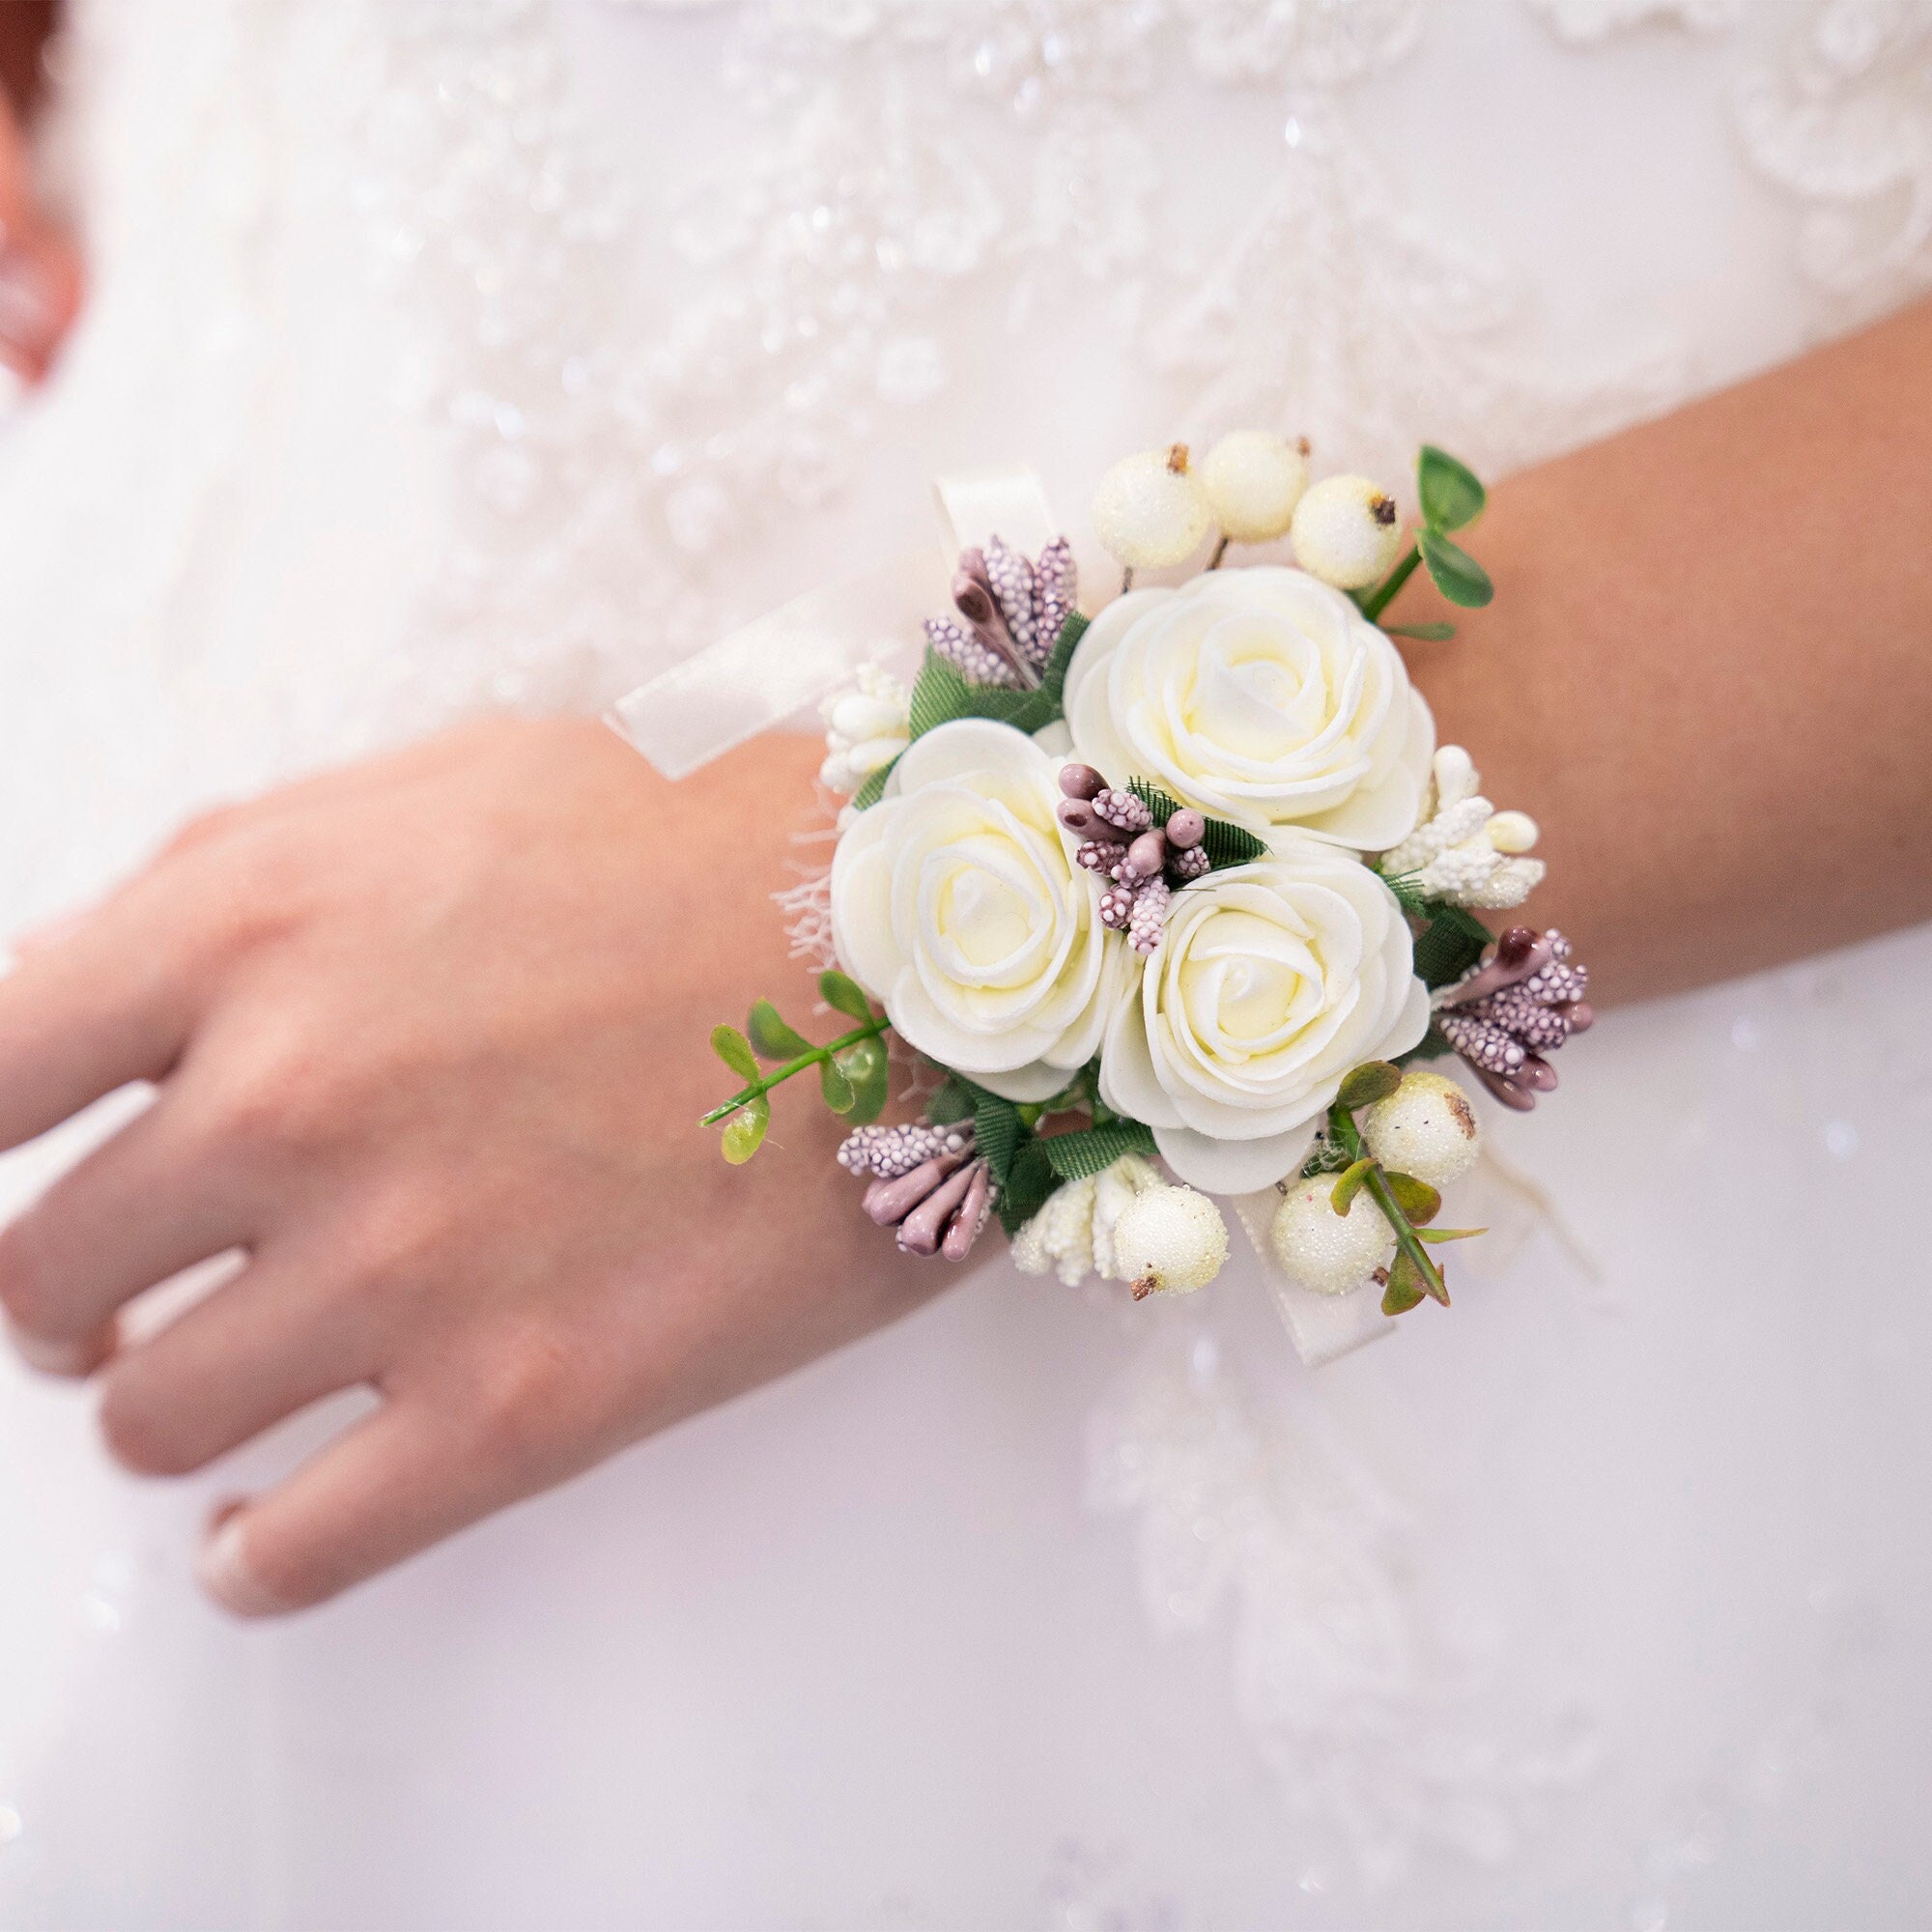 Casdre Bride Wedding Wrist Corsage Bridal Hand Flower with Ribbon Corsage Wristlet Wedding Accessories for Women and Girls (Yellow)